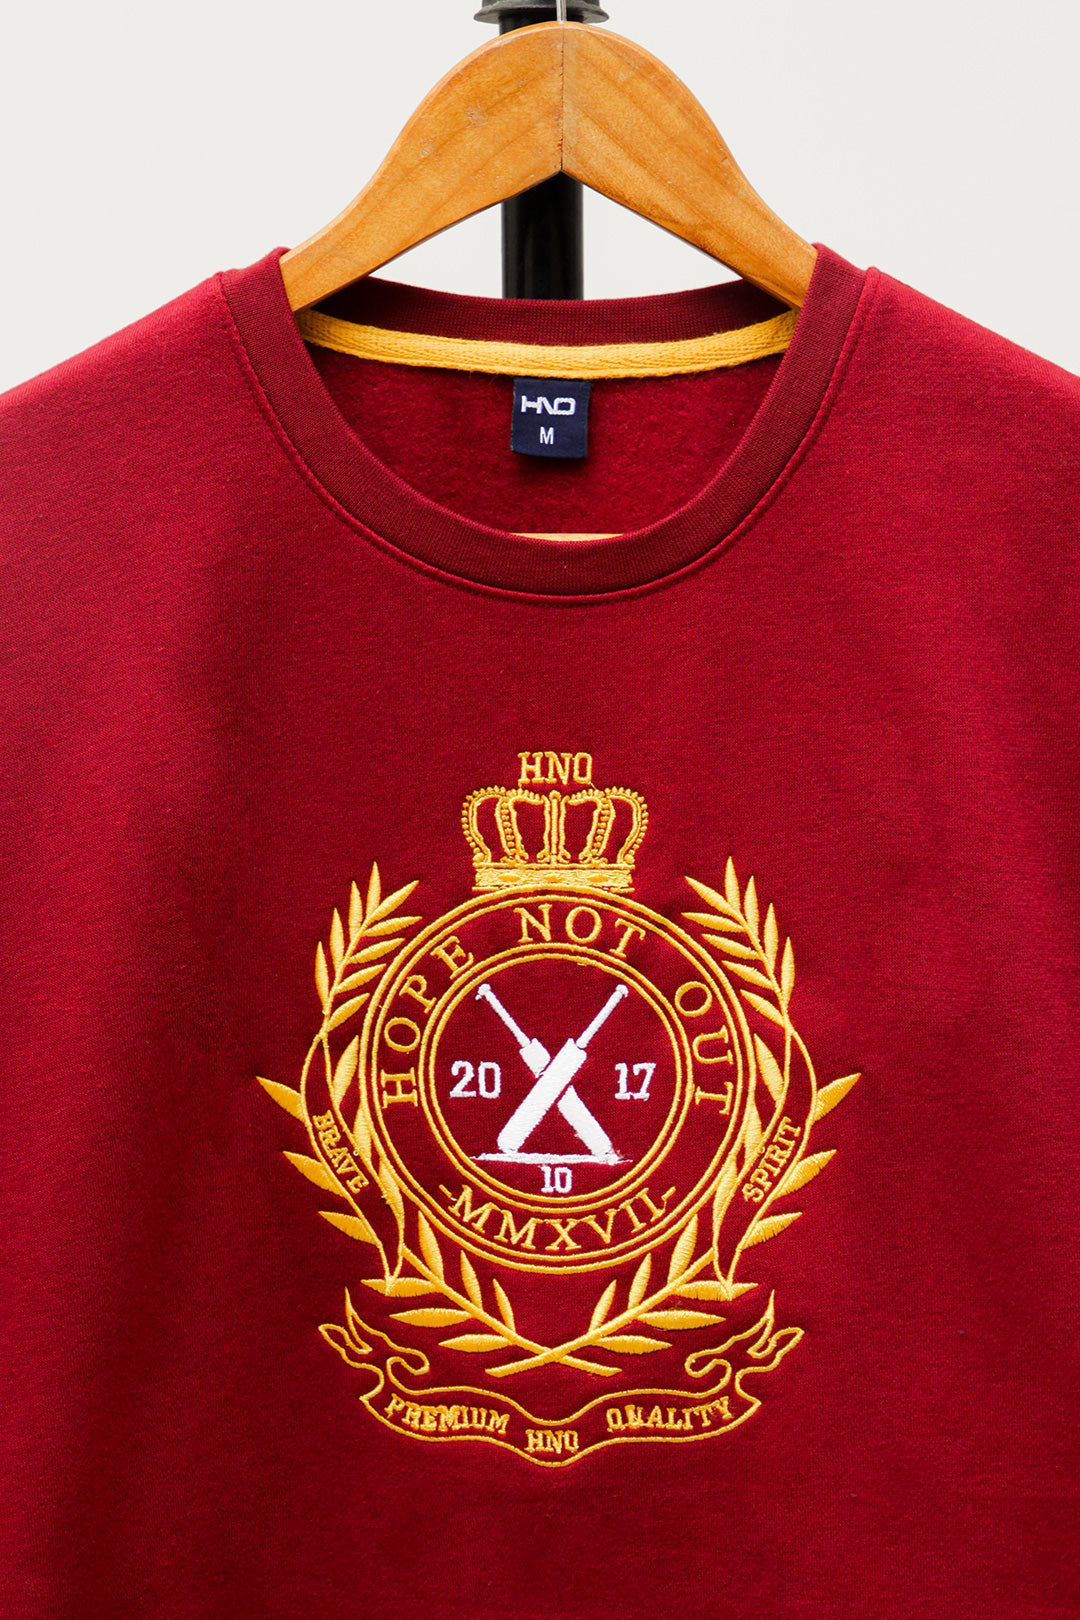 Men's Embroidered Emblem Sweat Shirt